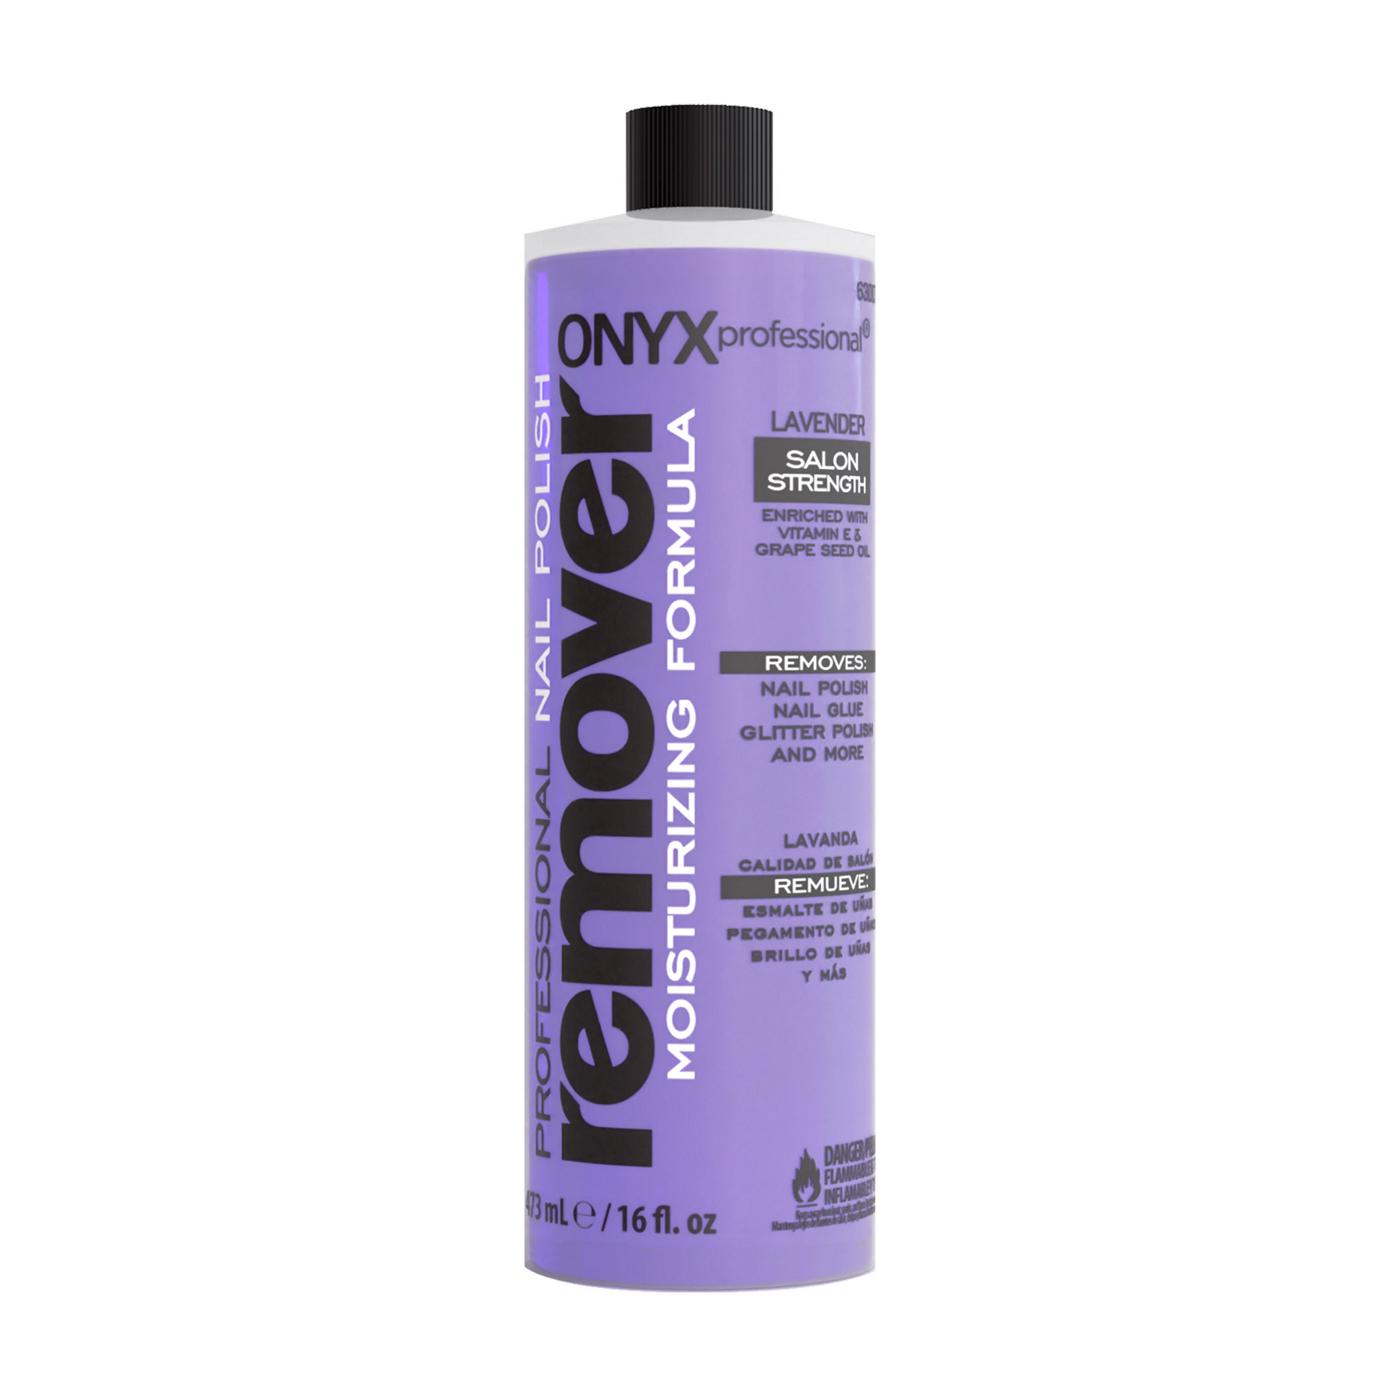 Onyx Professional Remover Moisturizing Formula Nail Polish Remover - Lavender; image 1 of 2